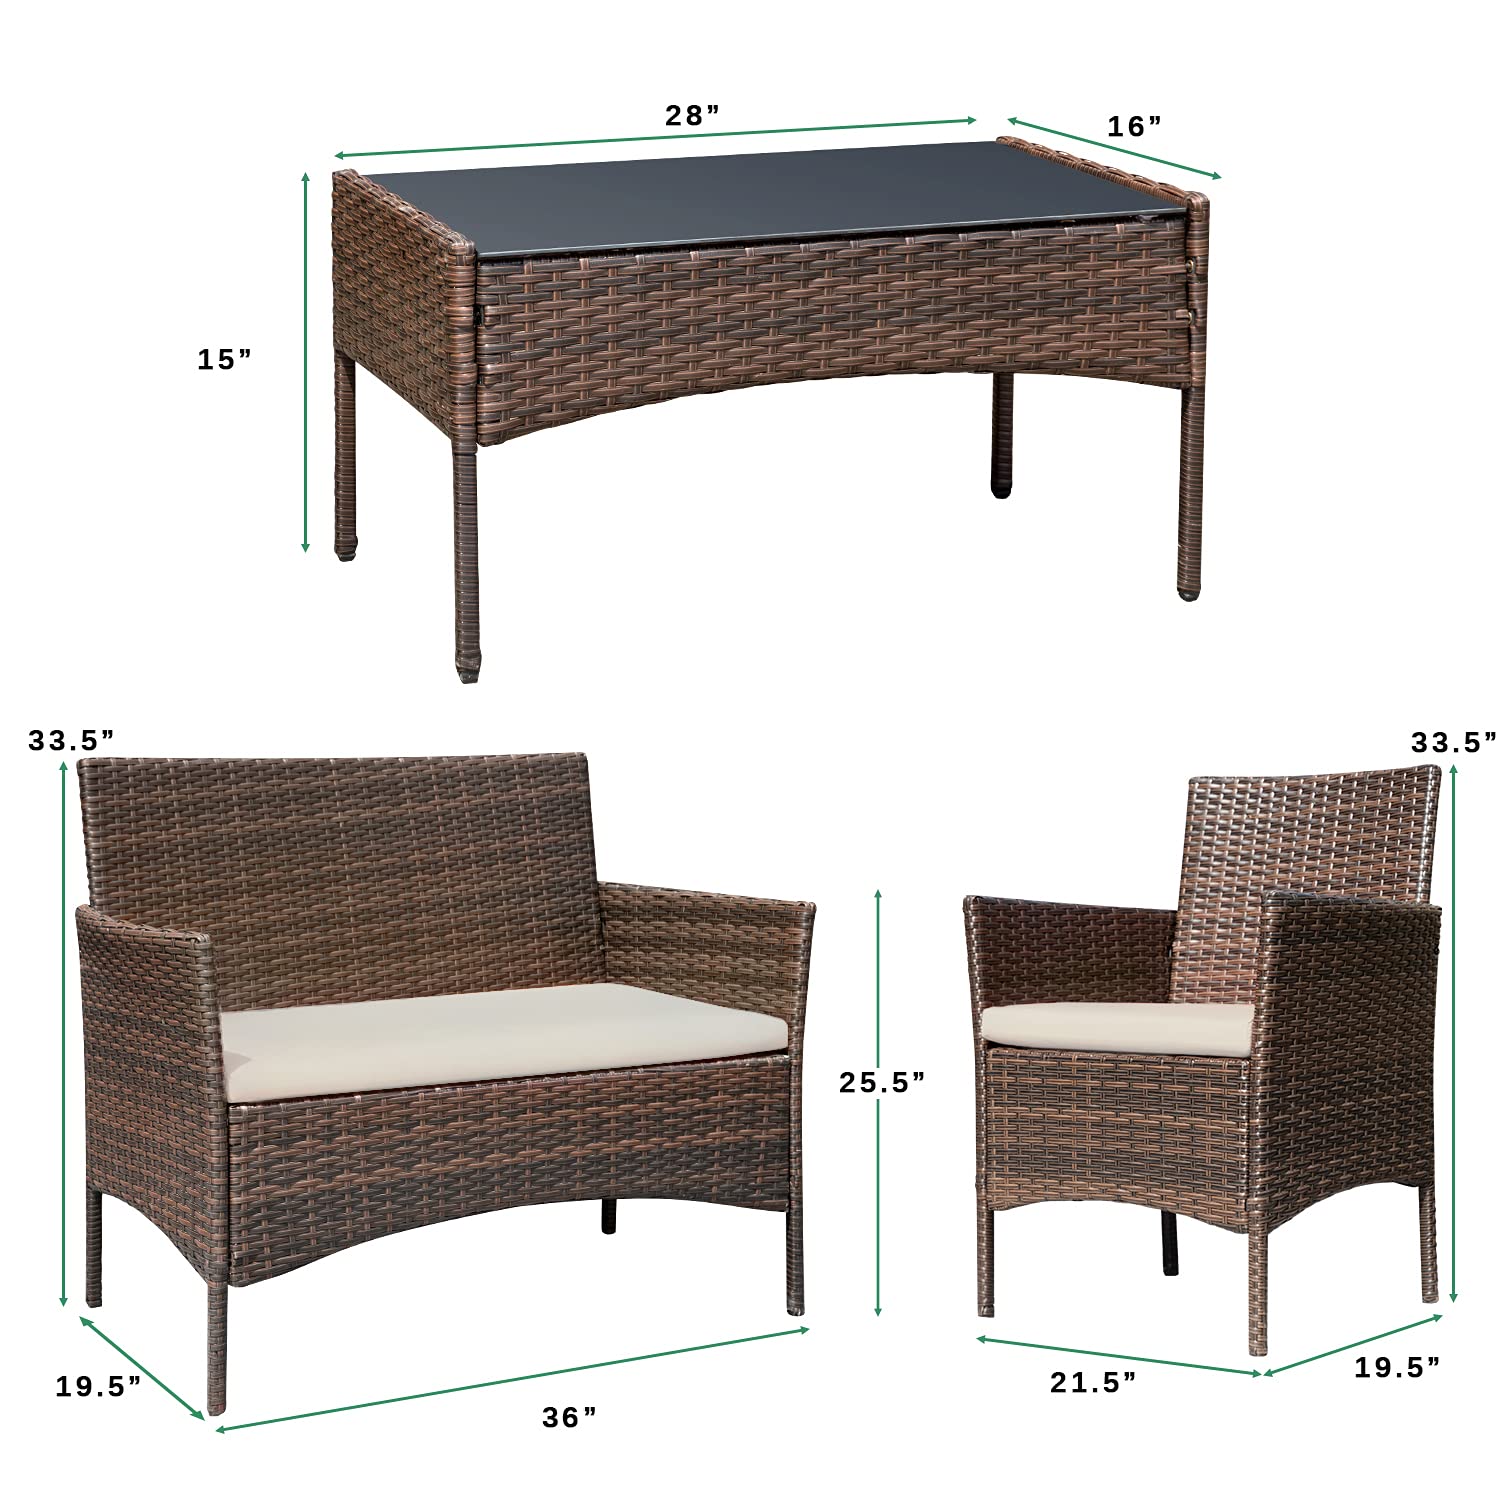 Patio Furniture 4 Pieces Conversation Sets Outdoor Wicker Rattan Chairs Garden Backyard